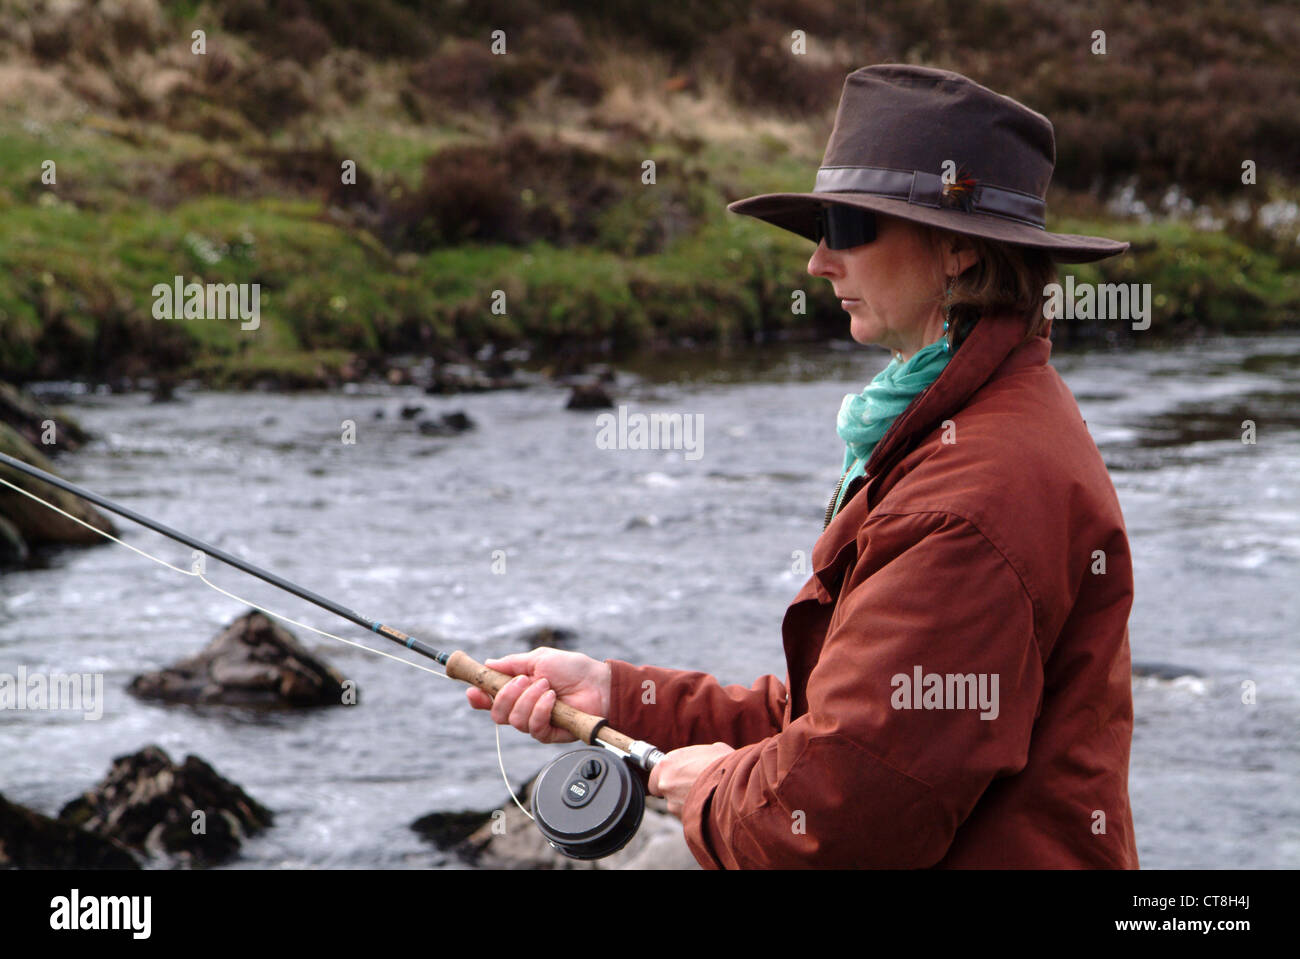 Woman fly fishing in Scotland, UK Stock Photo - Alamy